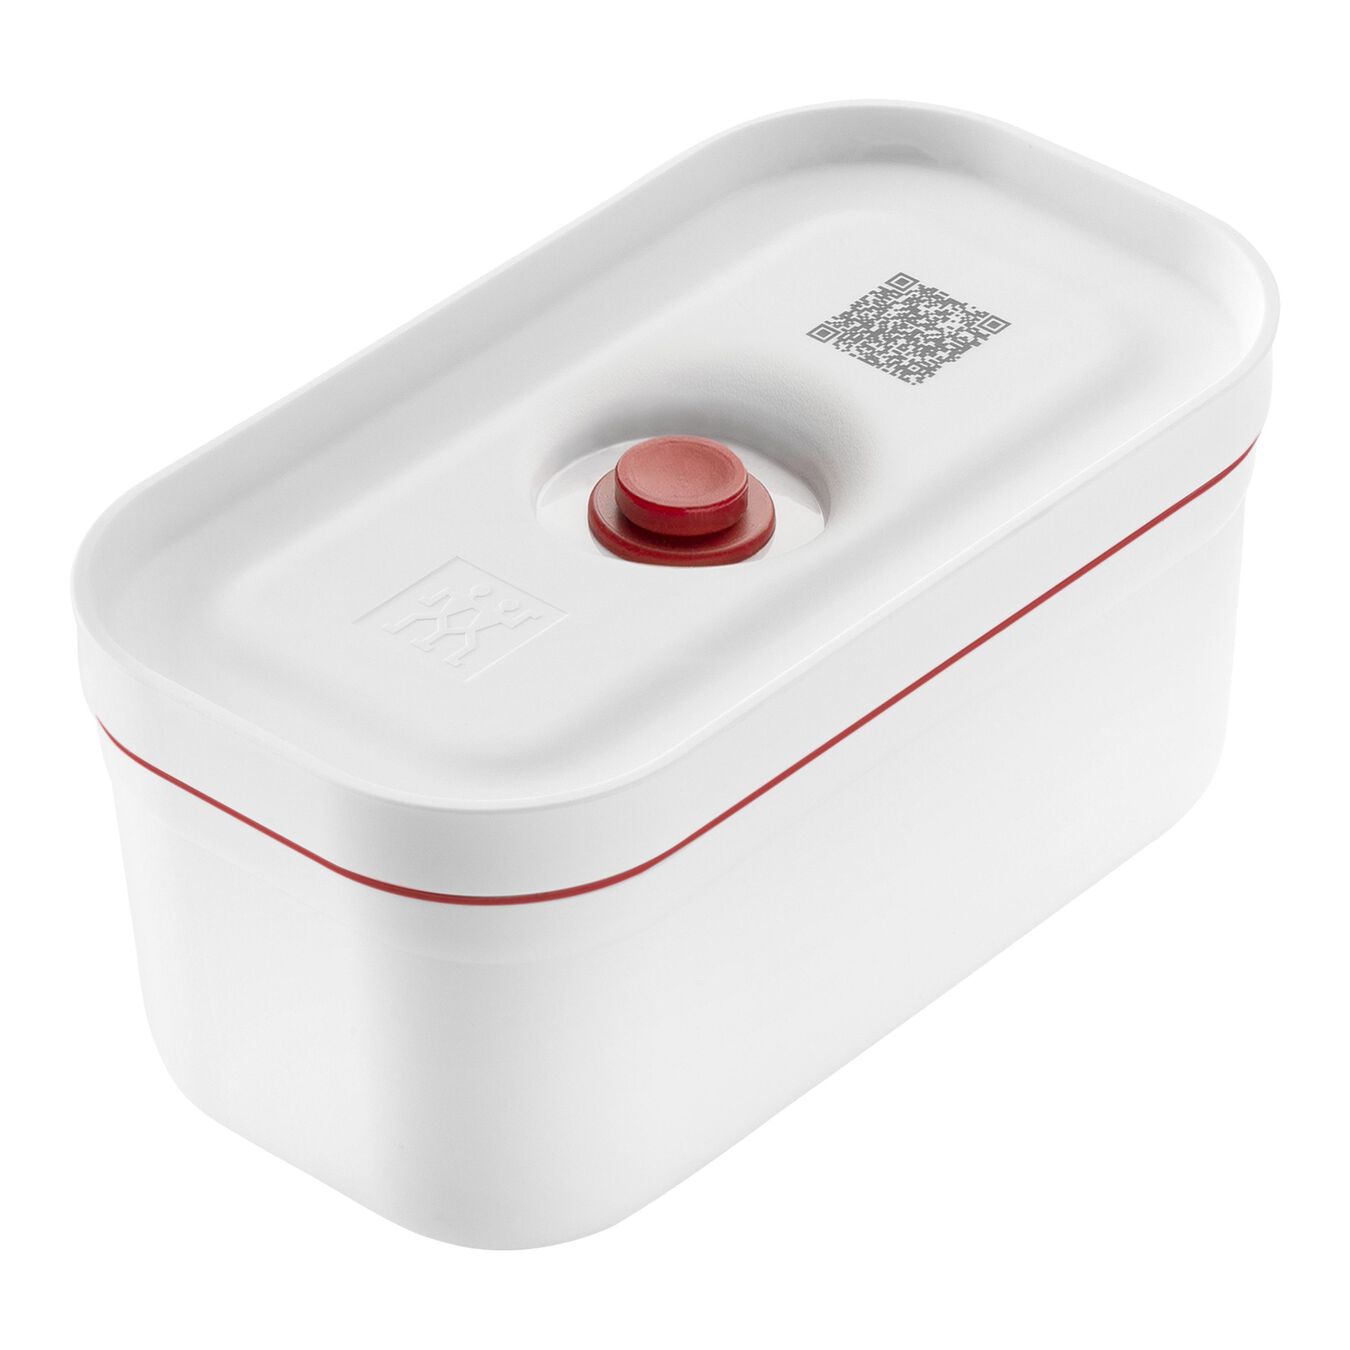 Vakuum Lunchbox S, Kunststoff, Weiß-Rot,,large 1